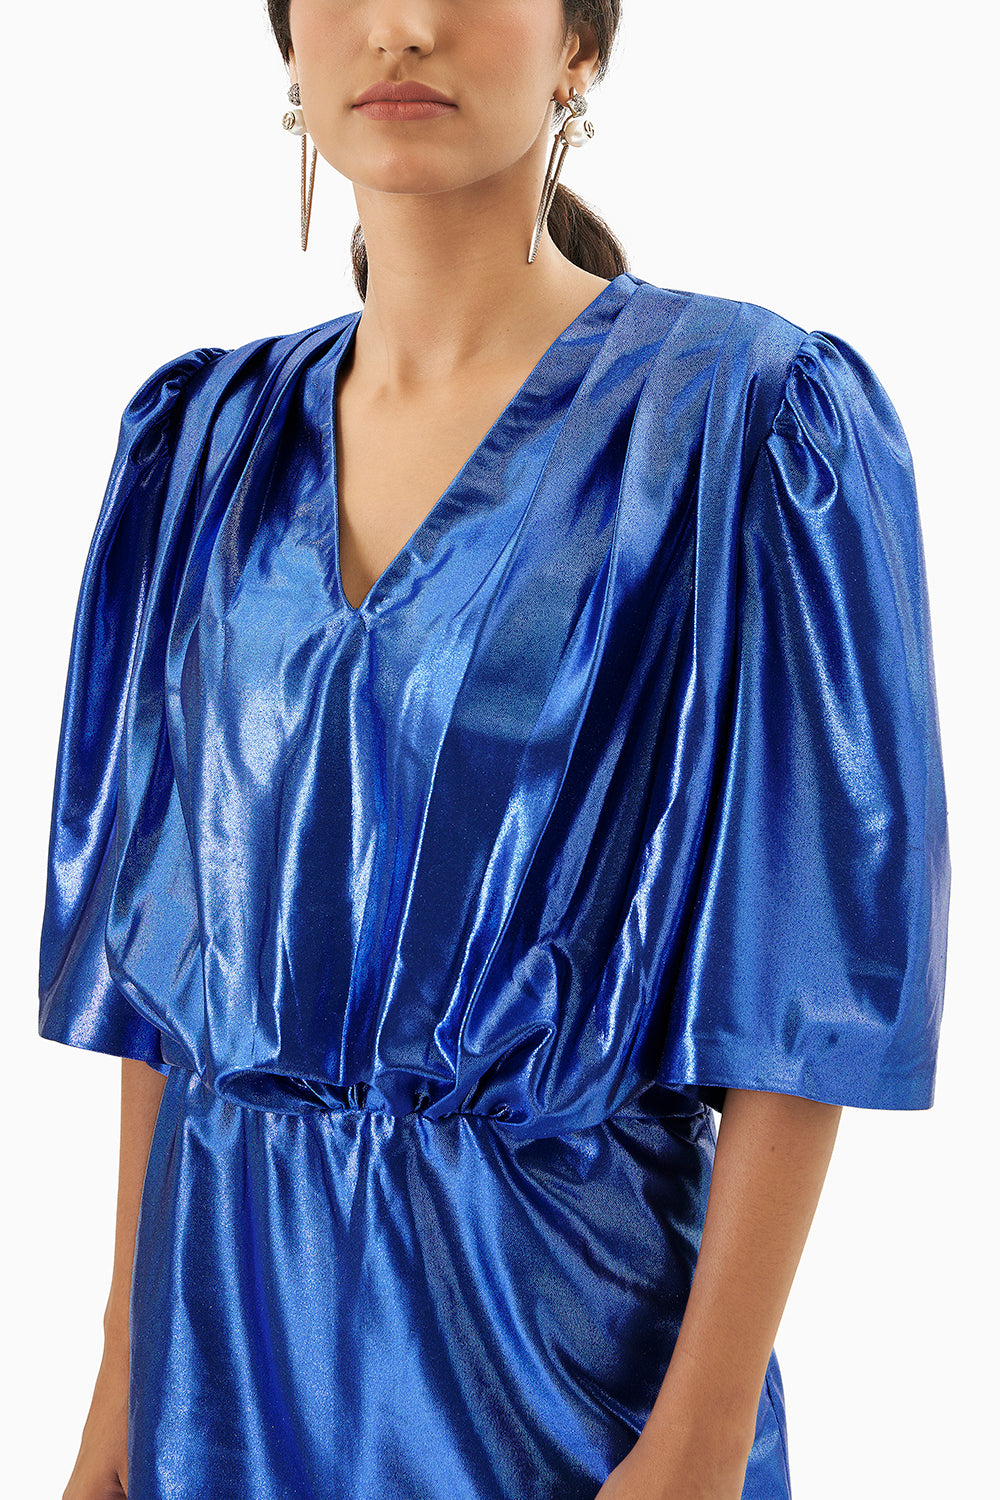 Metallic Blue Ruched Dress